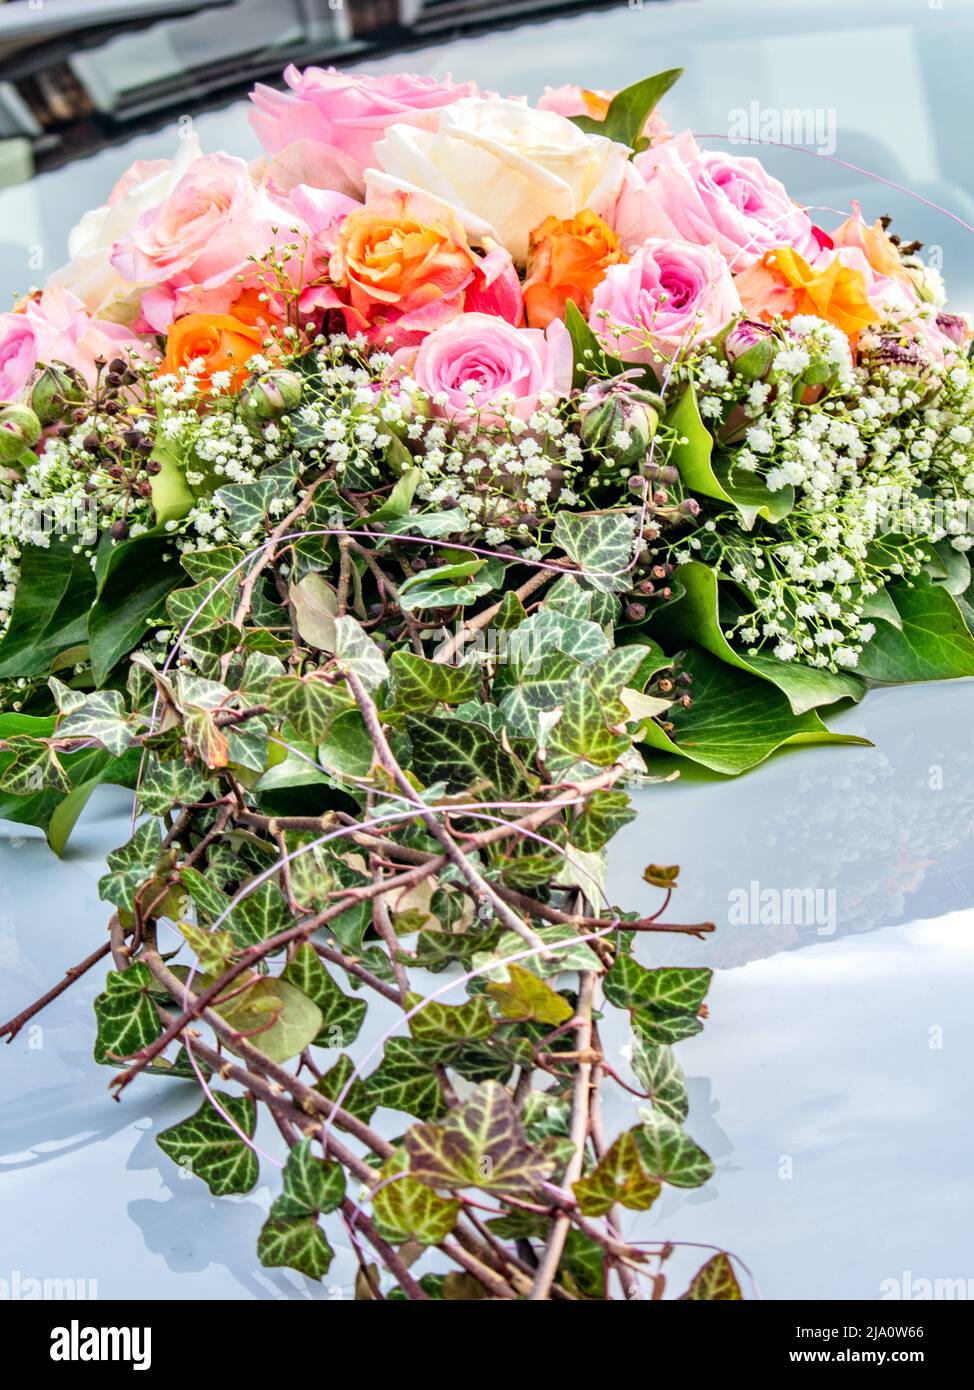 CONCEPT : Wedding bouquet Stock Photo